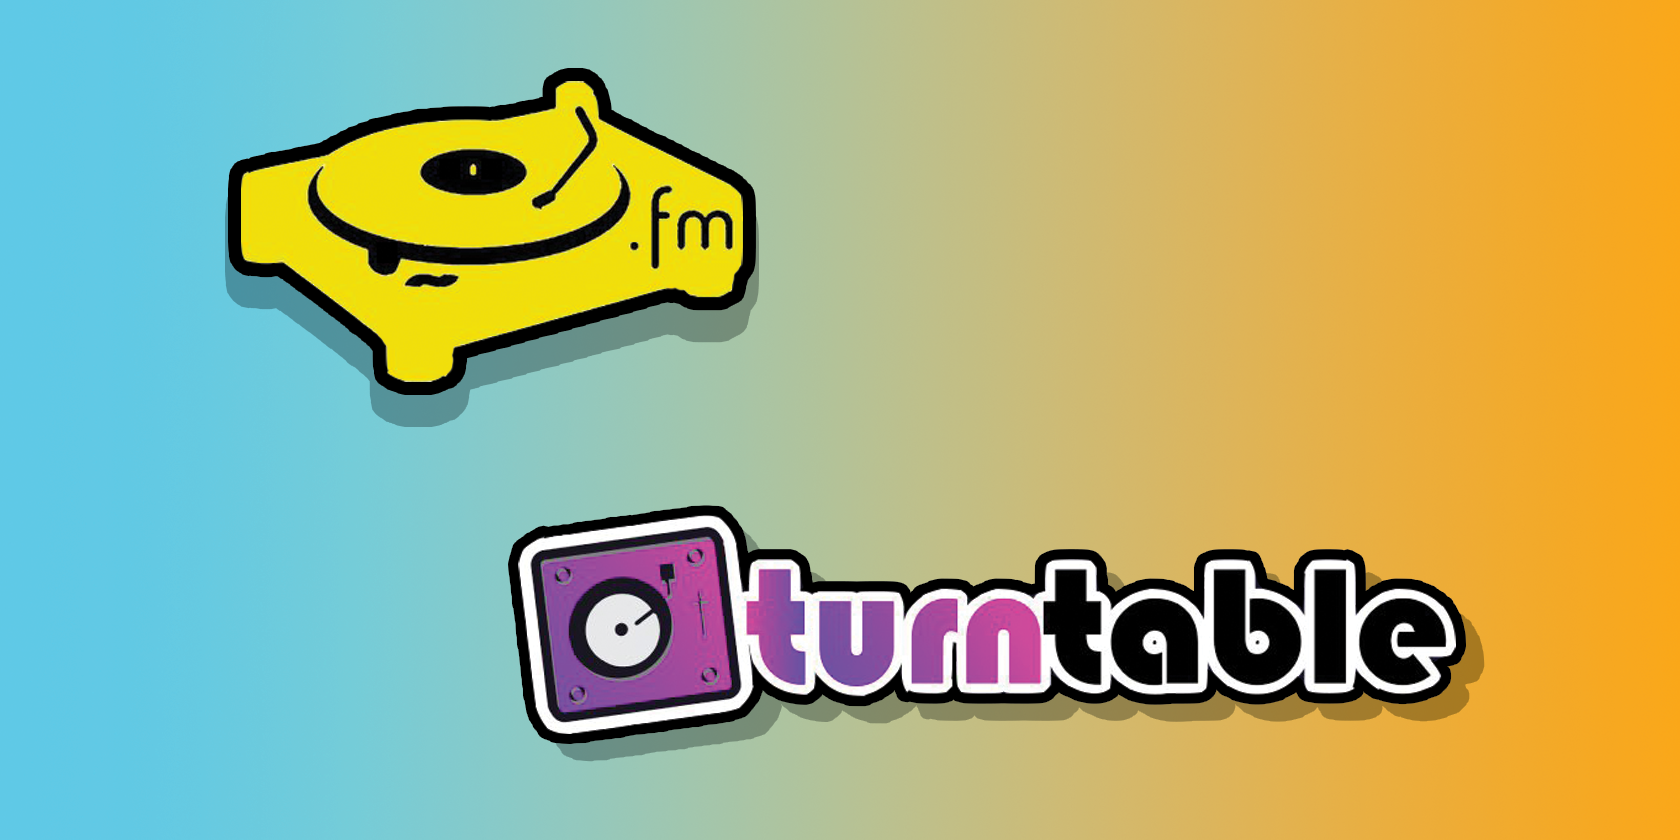 turntablefm and org logos